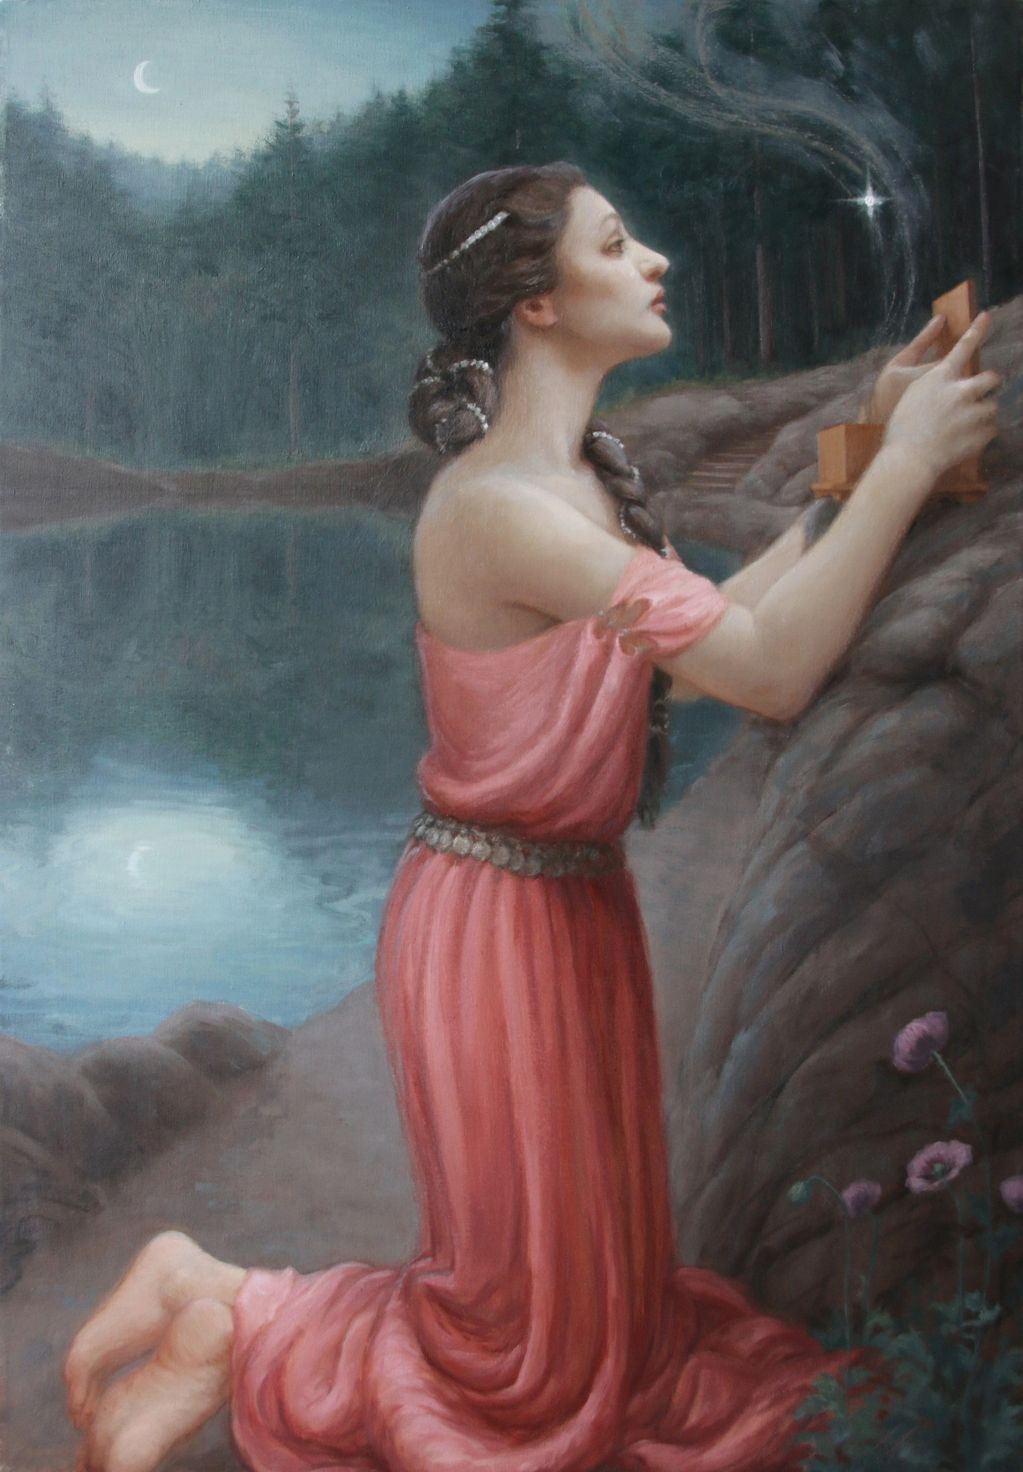 Woman knelt next to lake, holding an open box